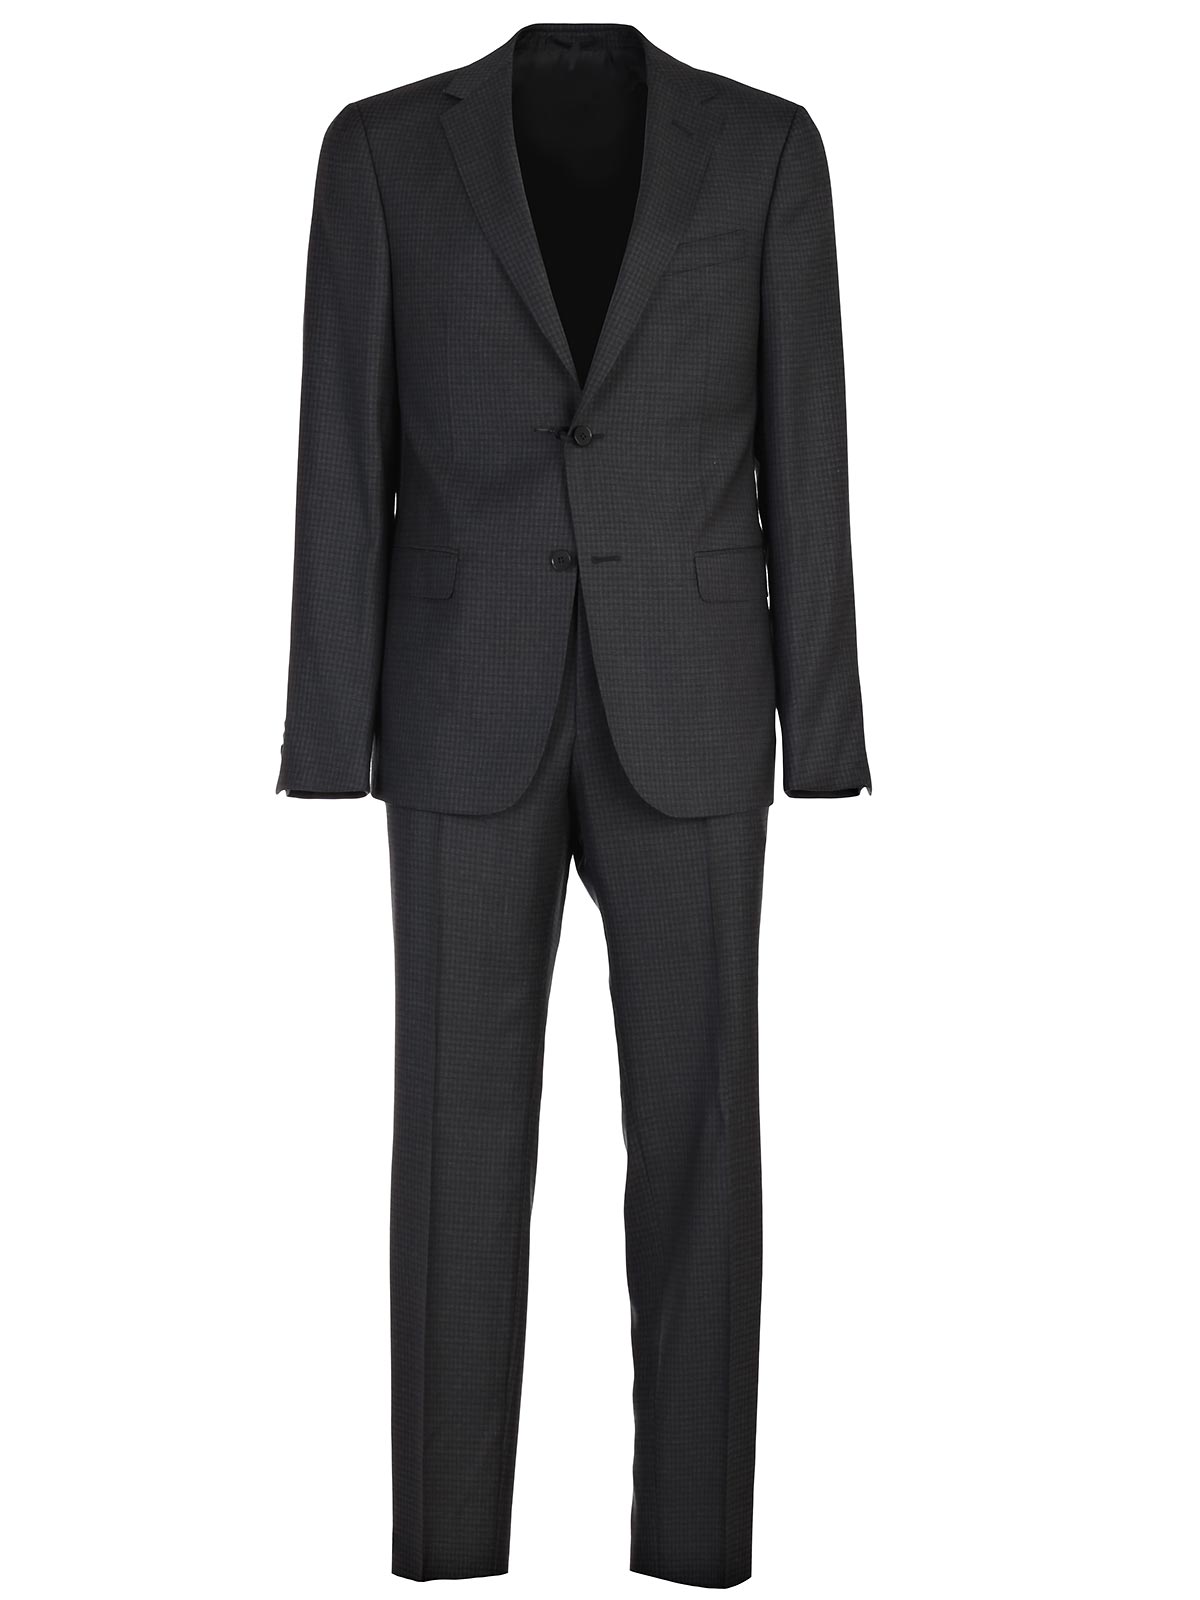 Z Zegna Suits 224768.281CGN - 8 GREY.Bernardelli Store - Online fashion ...